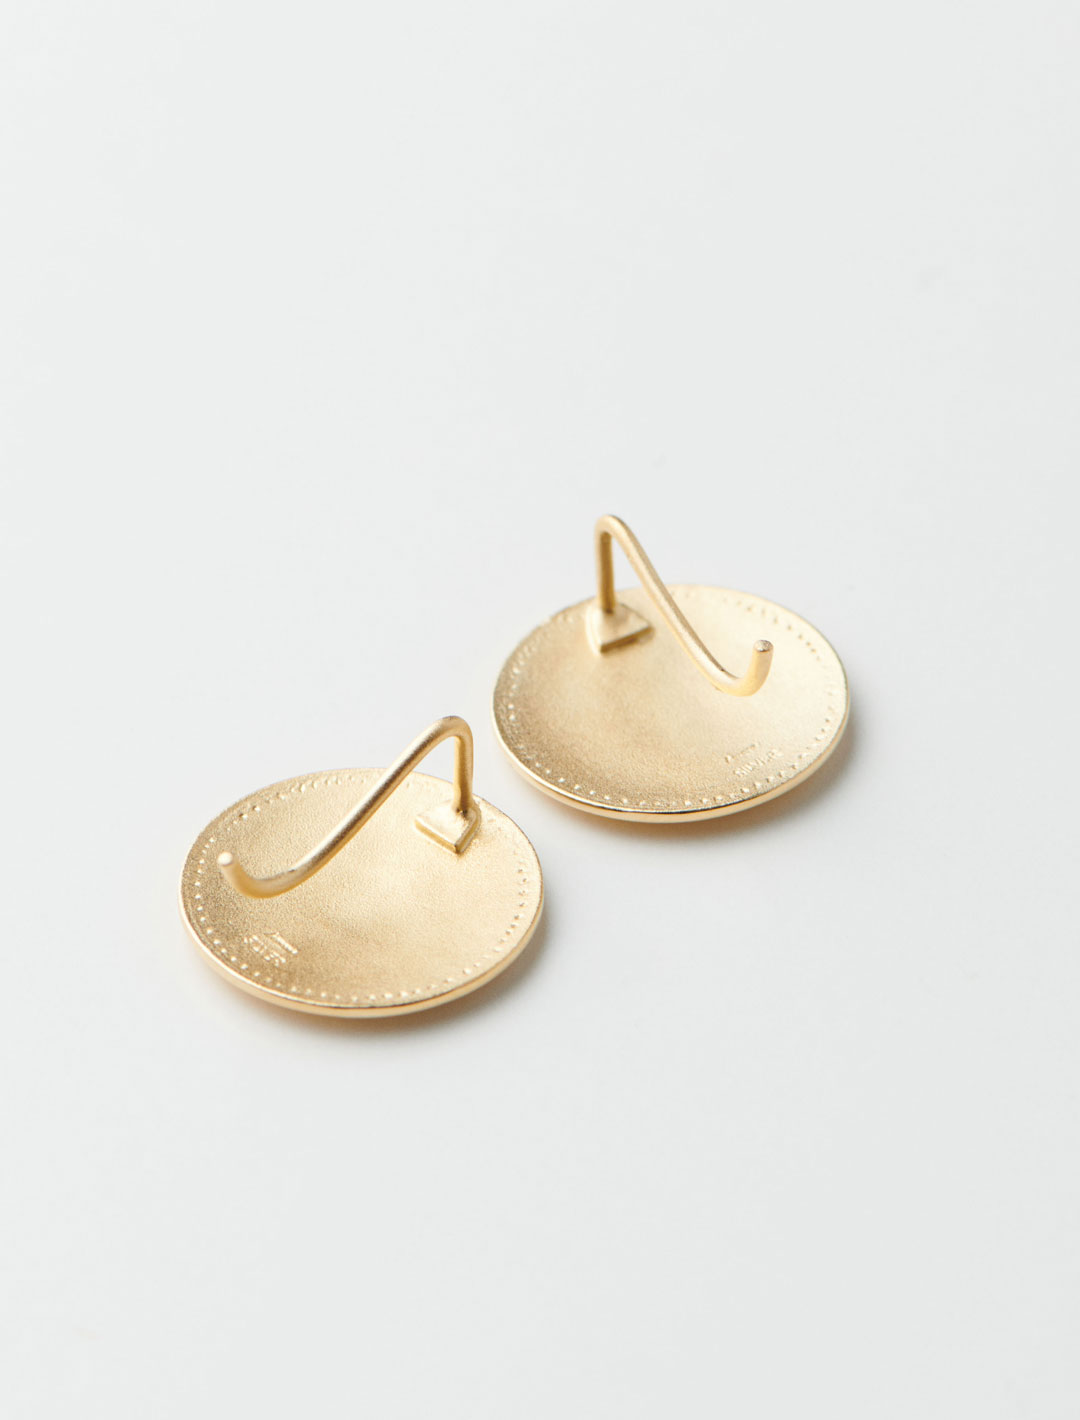 MIRROR PAIR Pierced Earrings - Yellow Gold